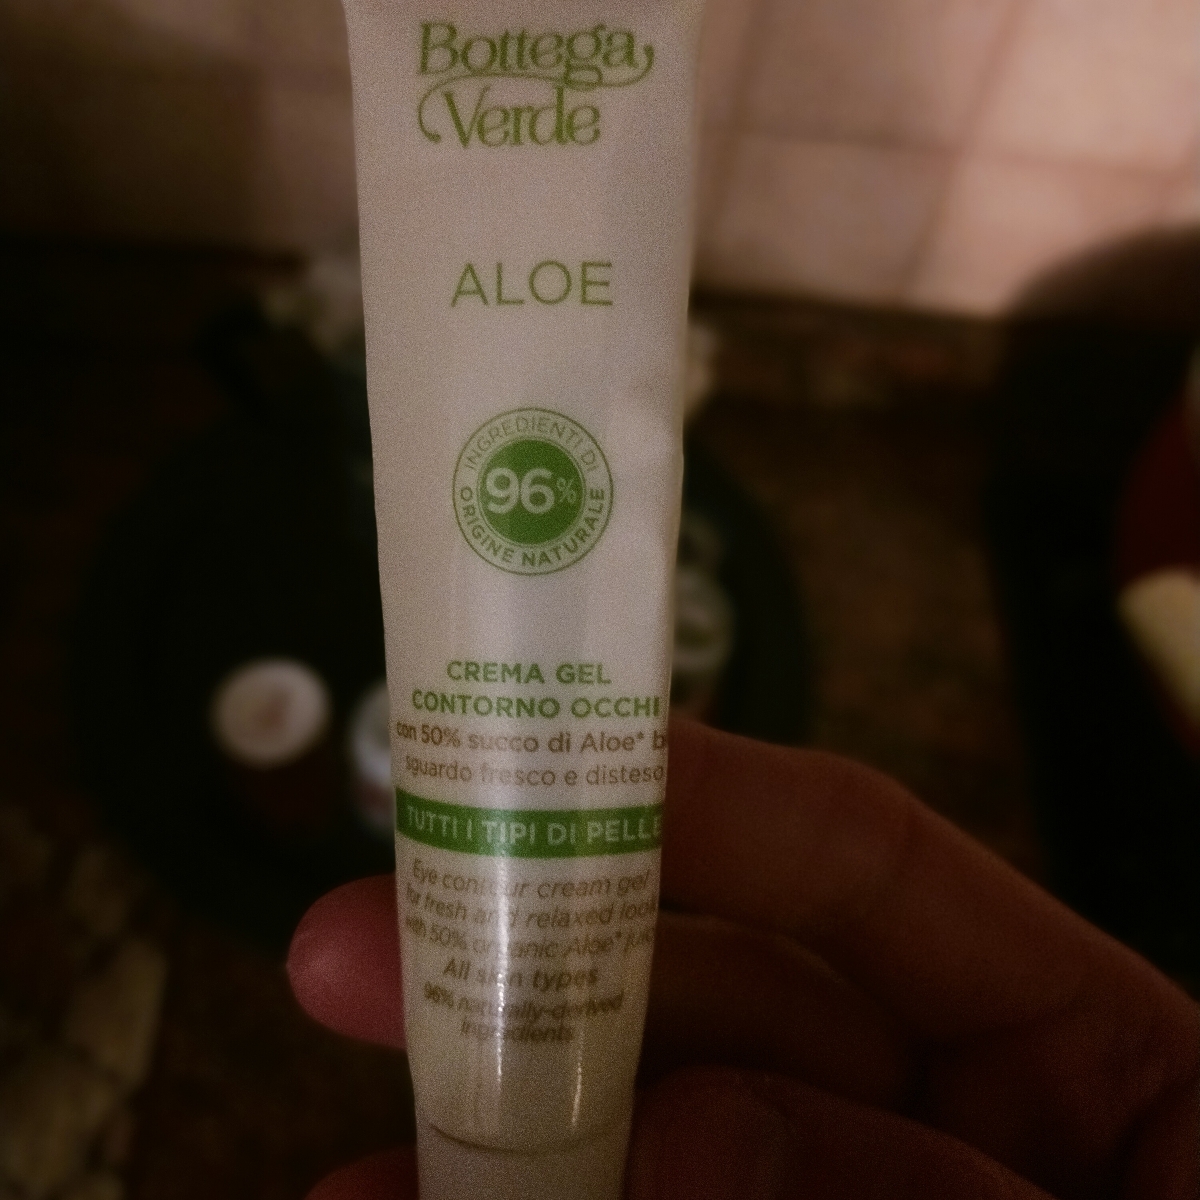 Bottega Verde Aloe Crema gel contorno occhi Reviews | abillion